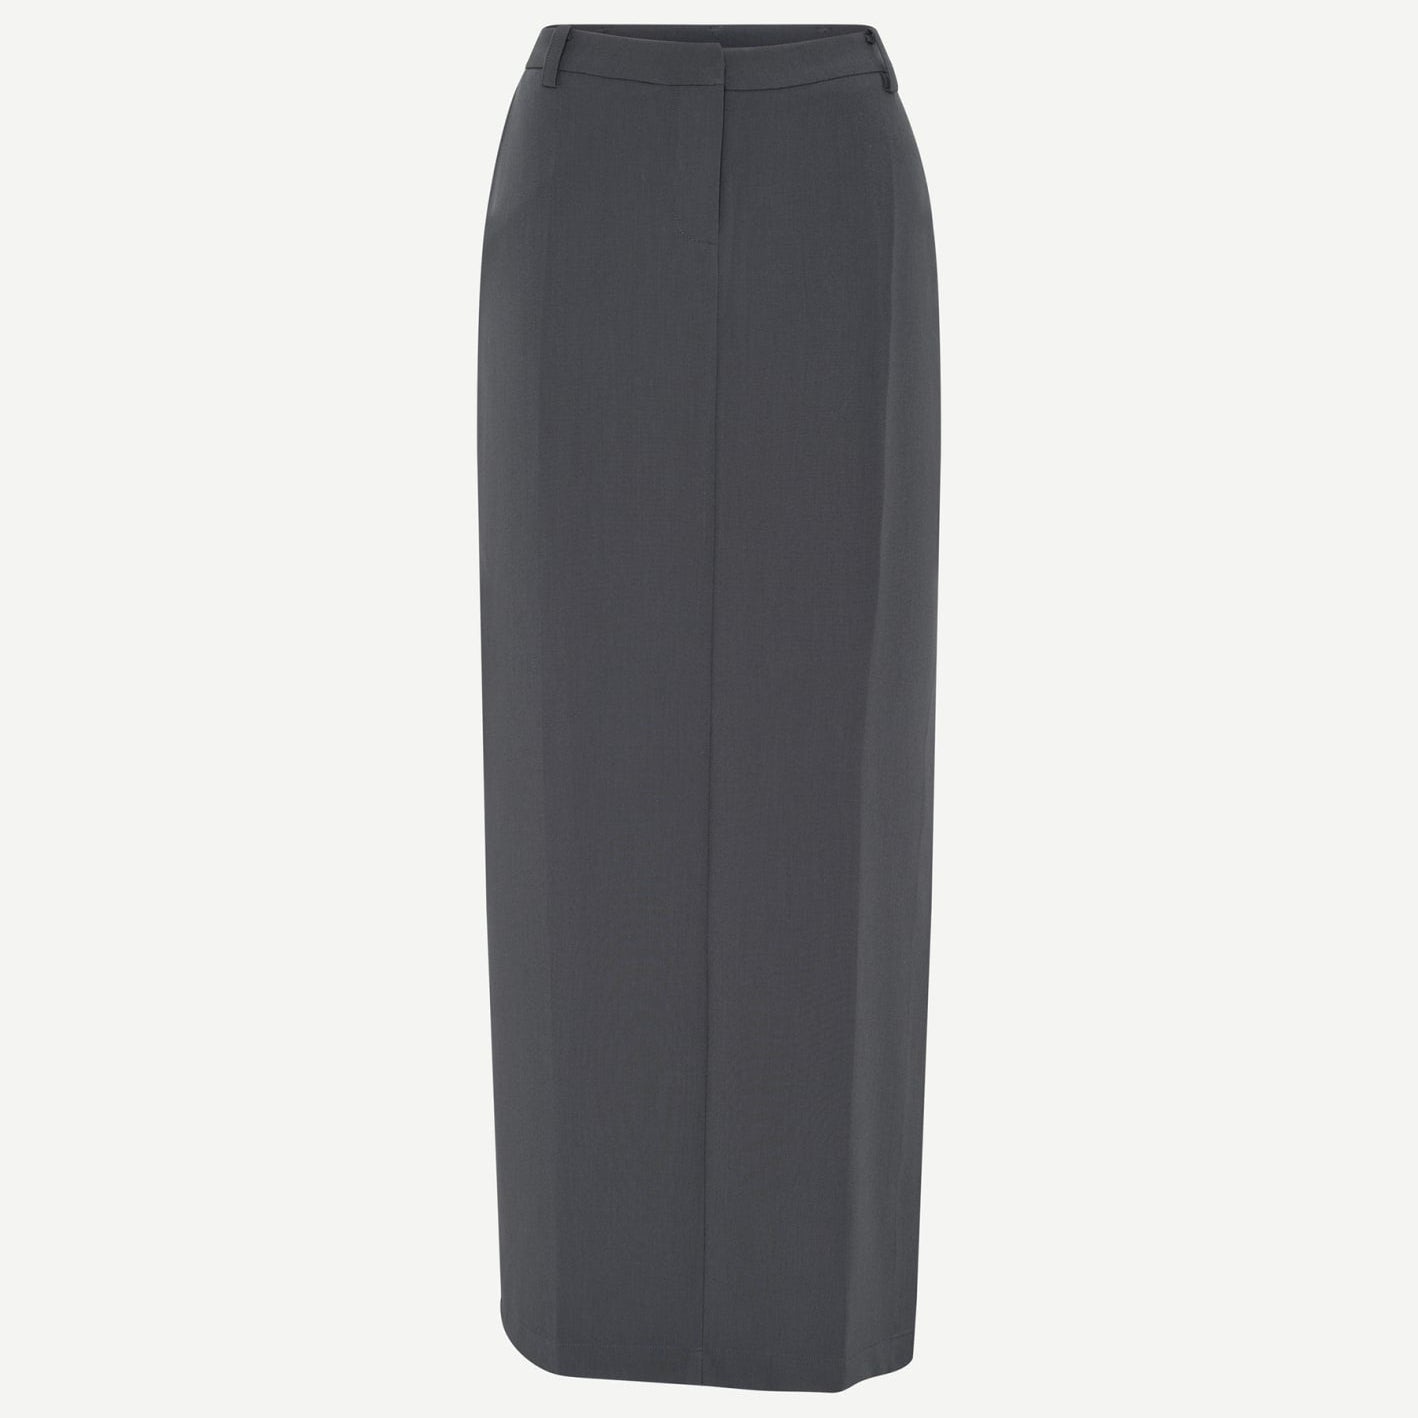 Nuna Skirt - Steel grey